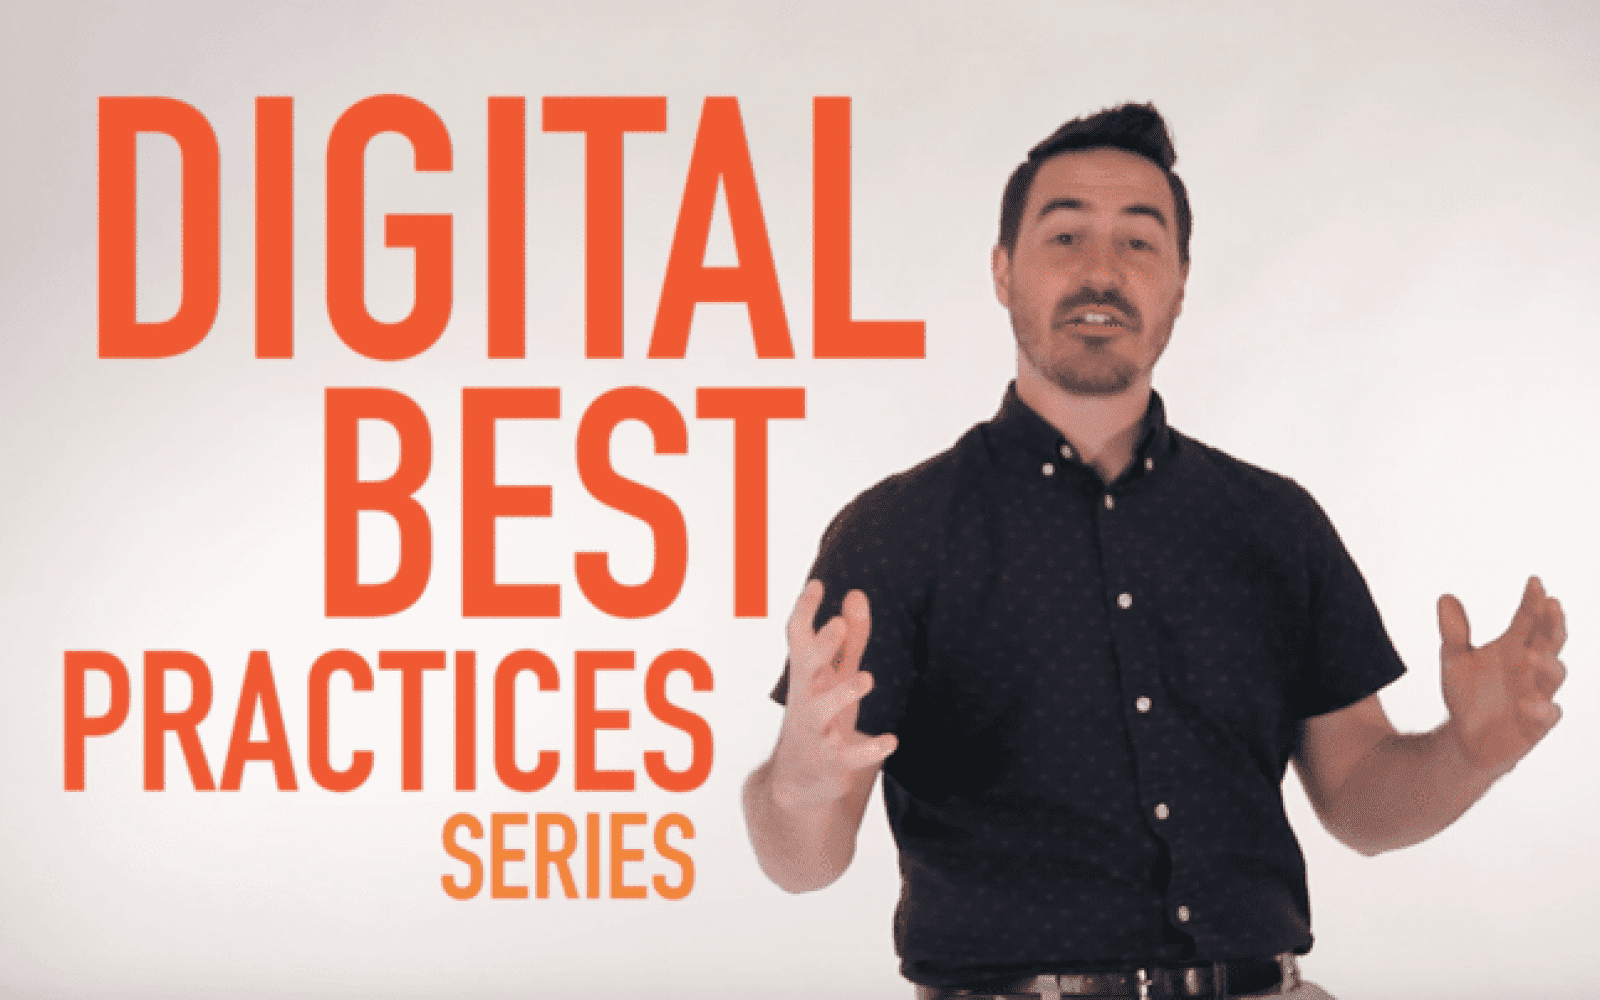 Digital Marketing Best Practices